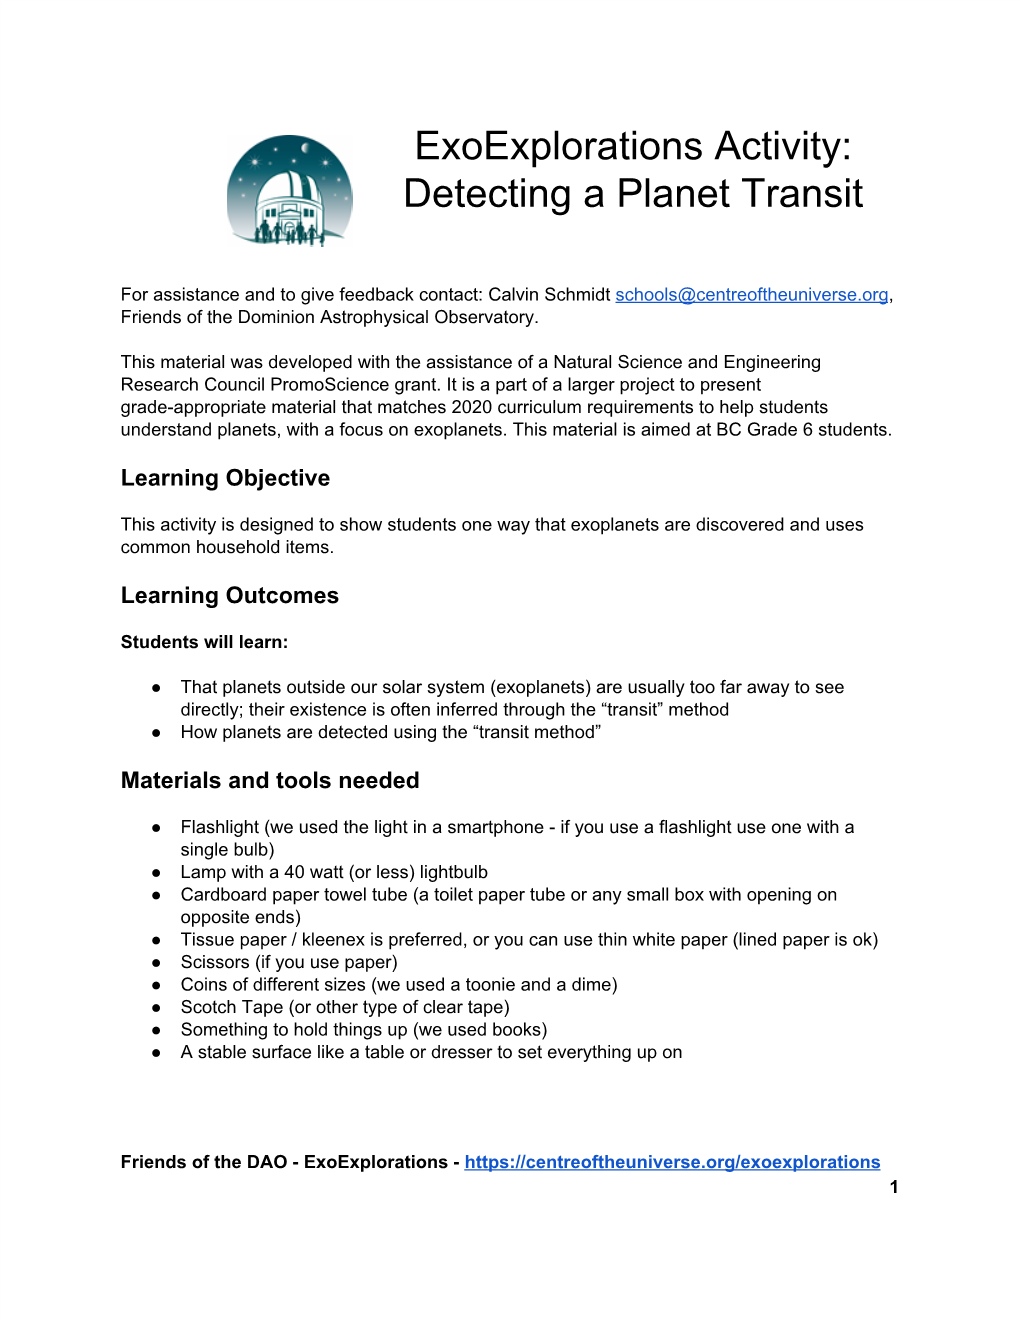 Exoexplorations Activity: Detecting a Planet Transit